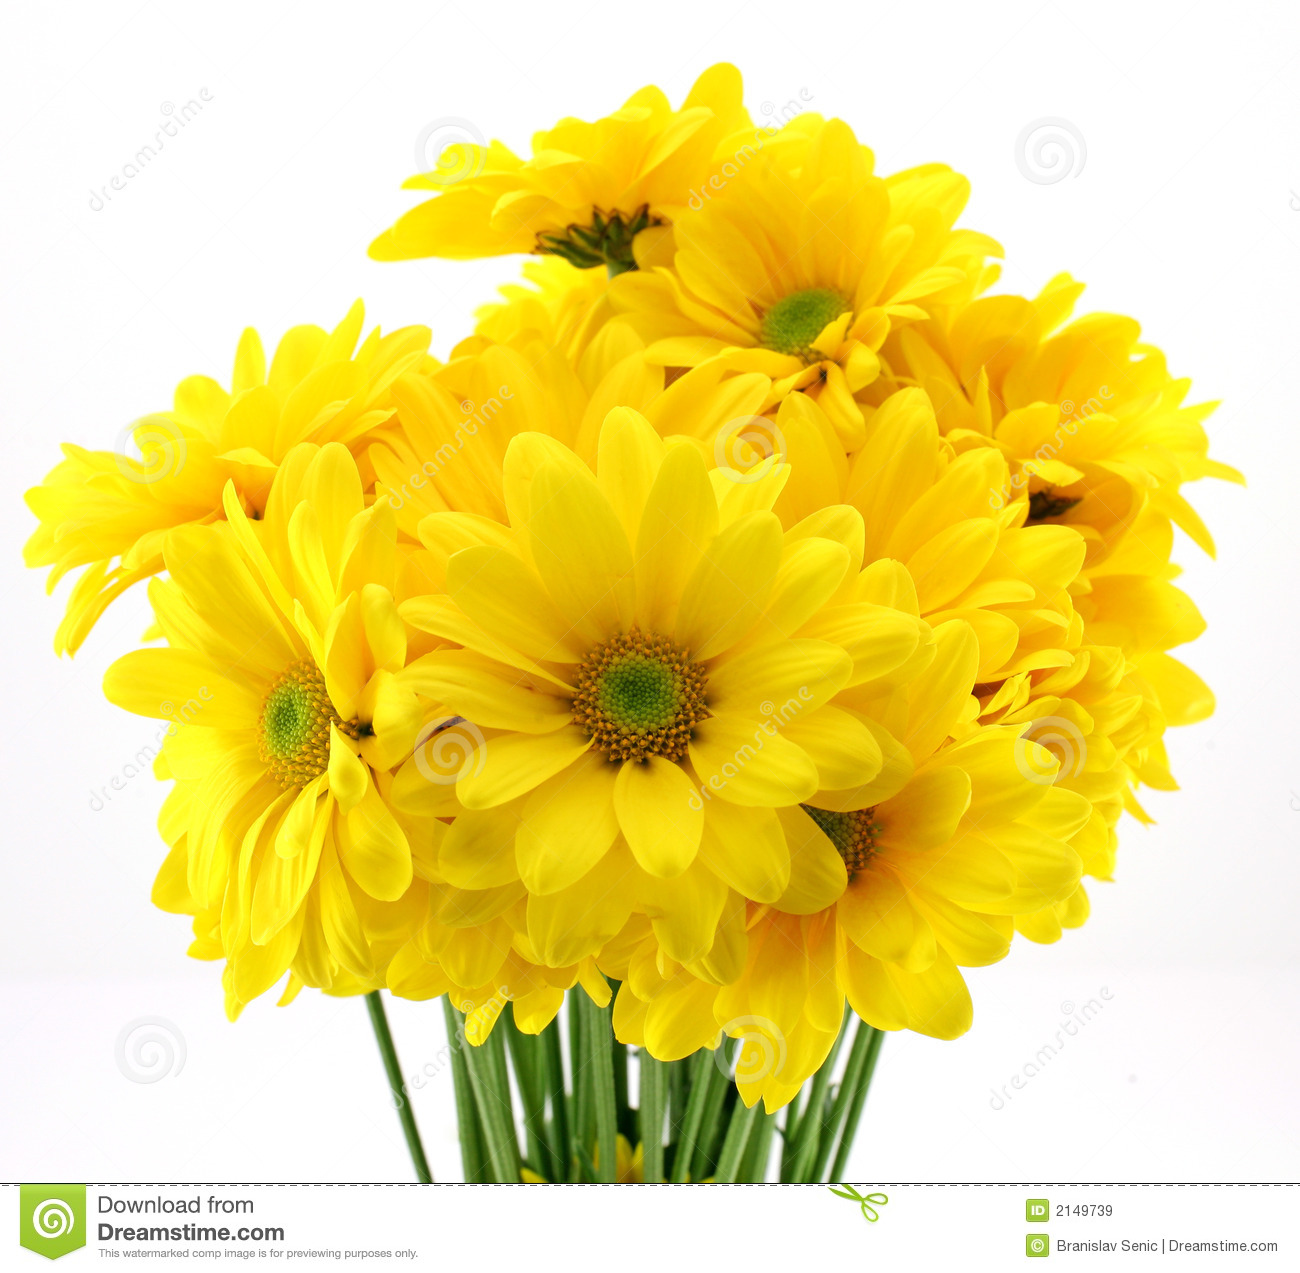 beautiful-yellow-flowers-2149739